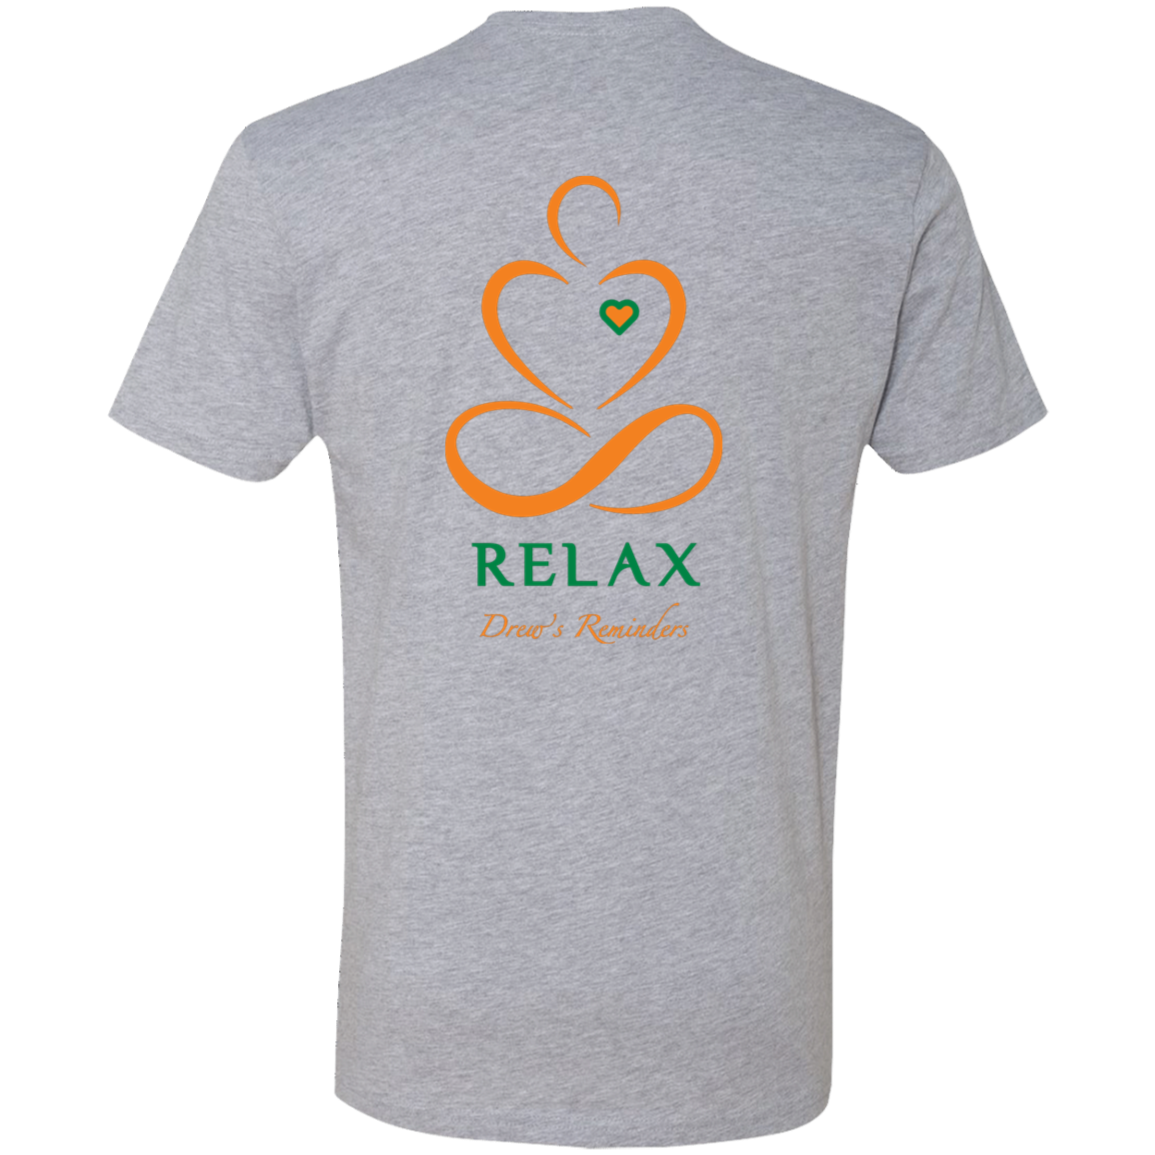 Relax Premium O&G T-Shirt